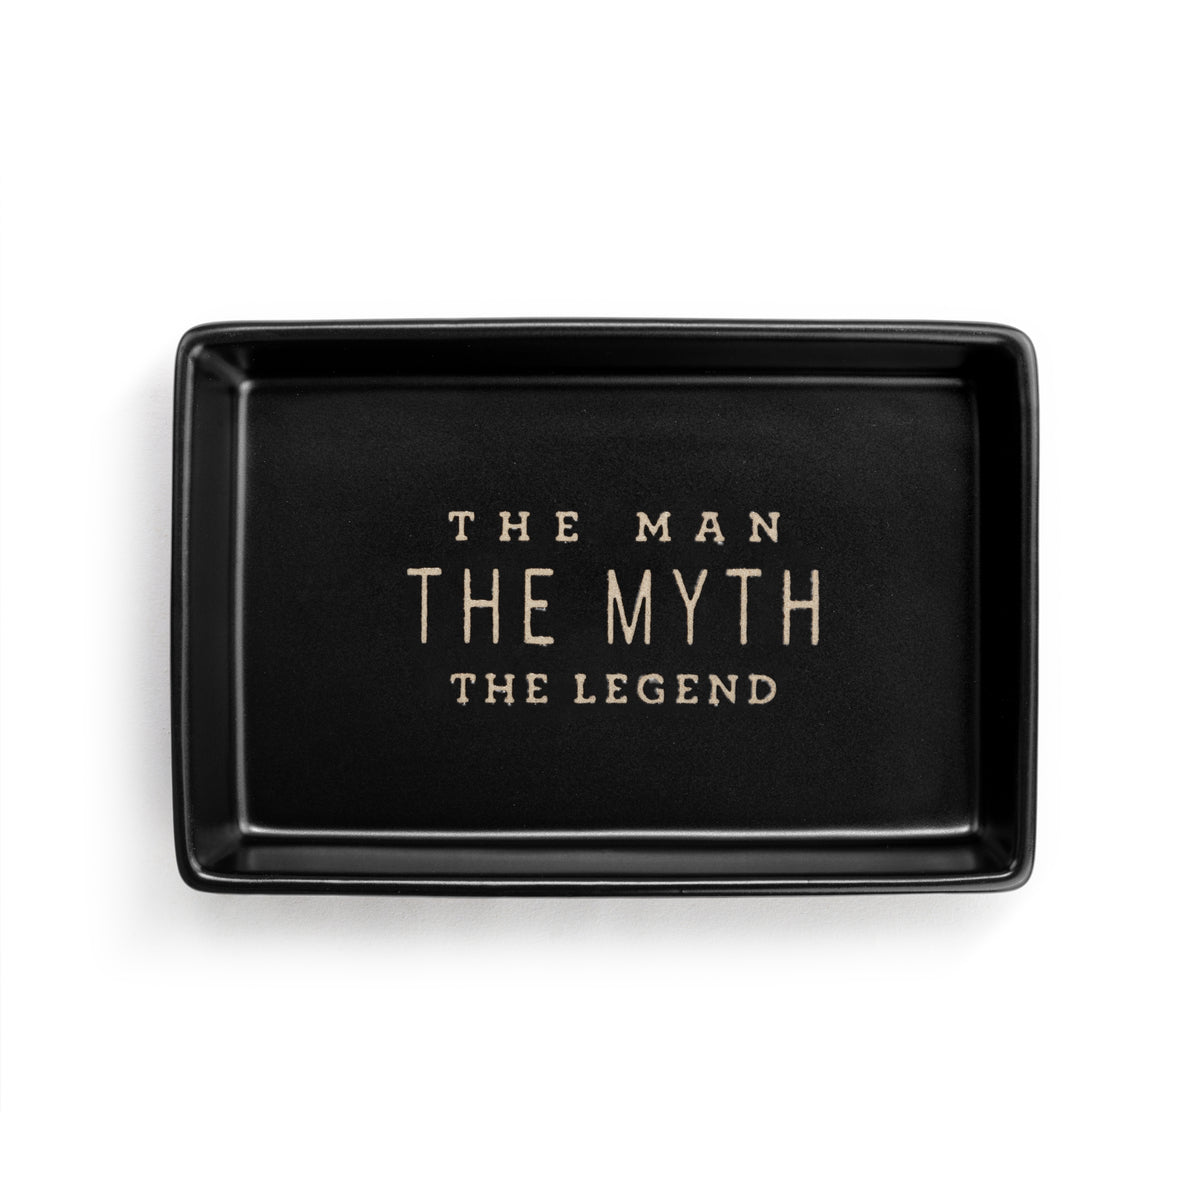 The Man, They Myth, The Legend Trinket Dish